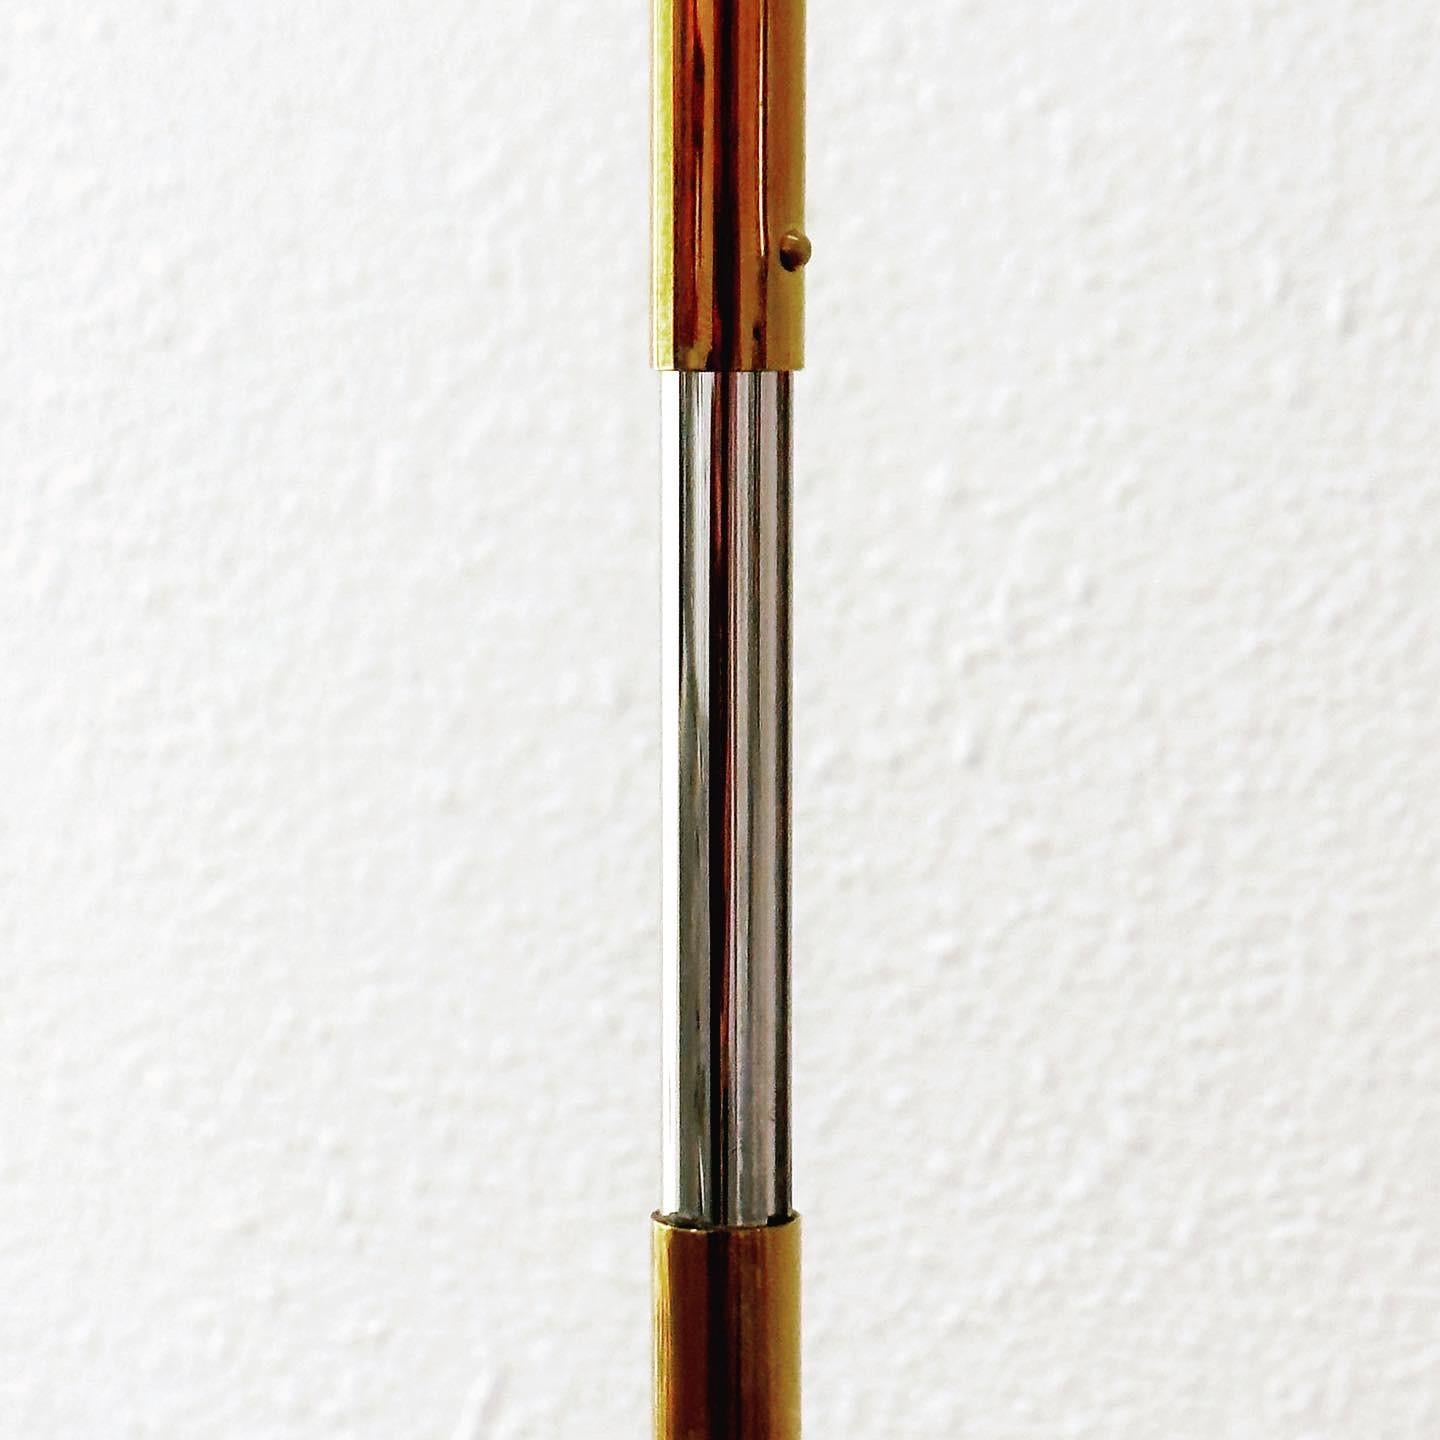 Cedric Hartman Pair Signed Adjustable Brass Reading Lamps 1UWV, 1967 Design 1